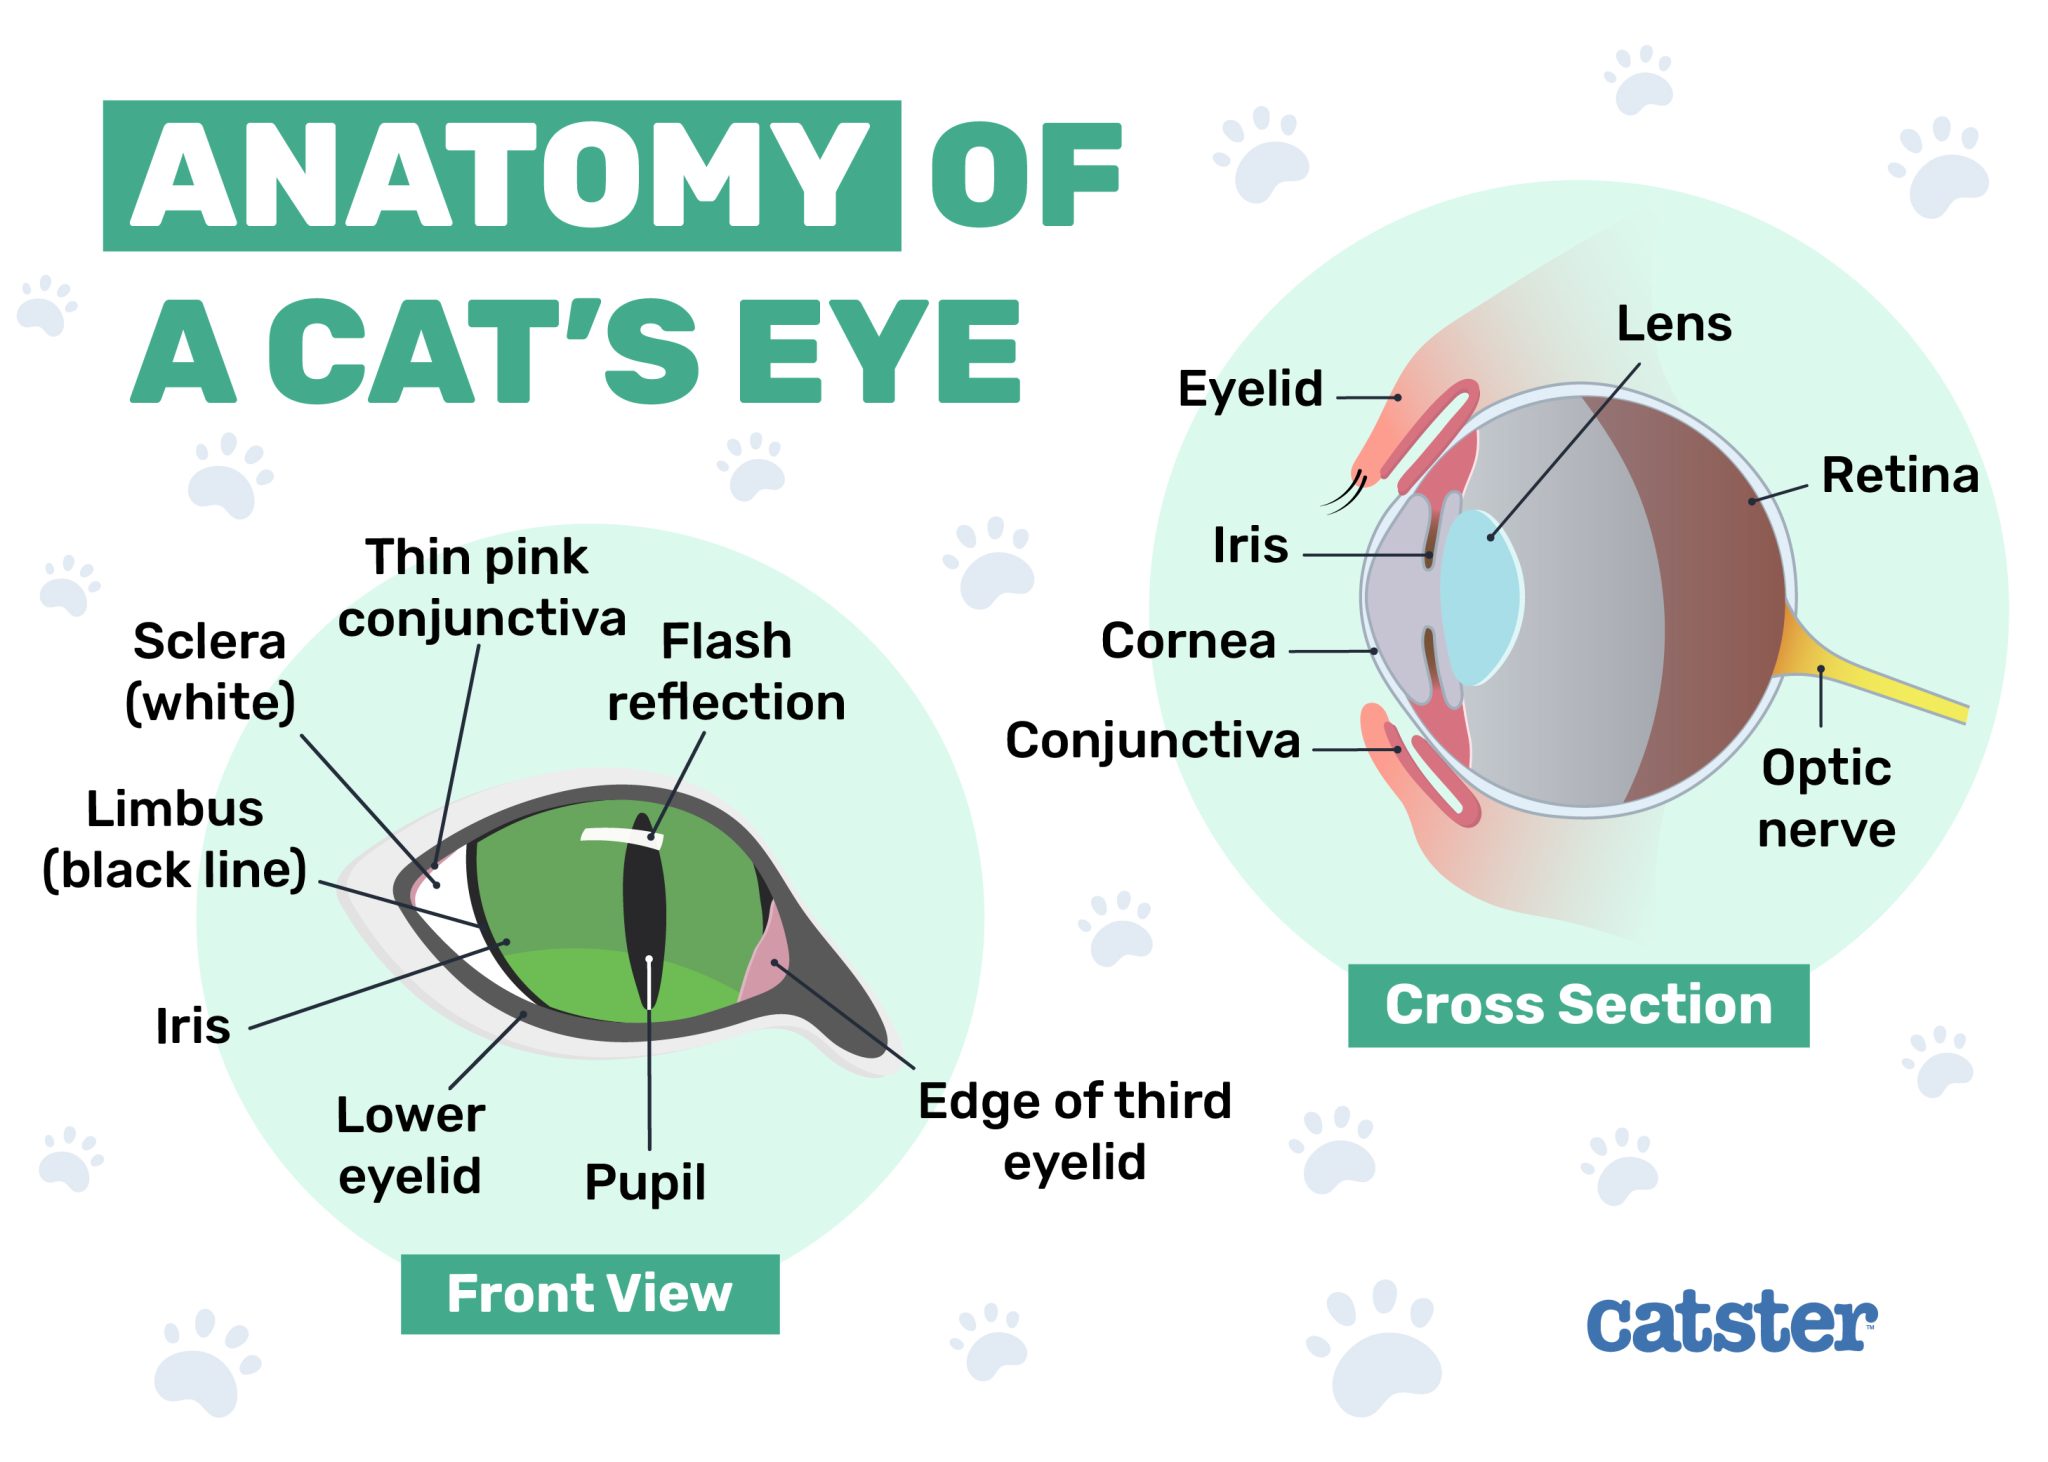 Anatomy of a cat's eye